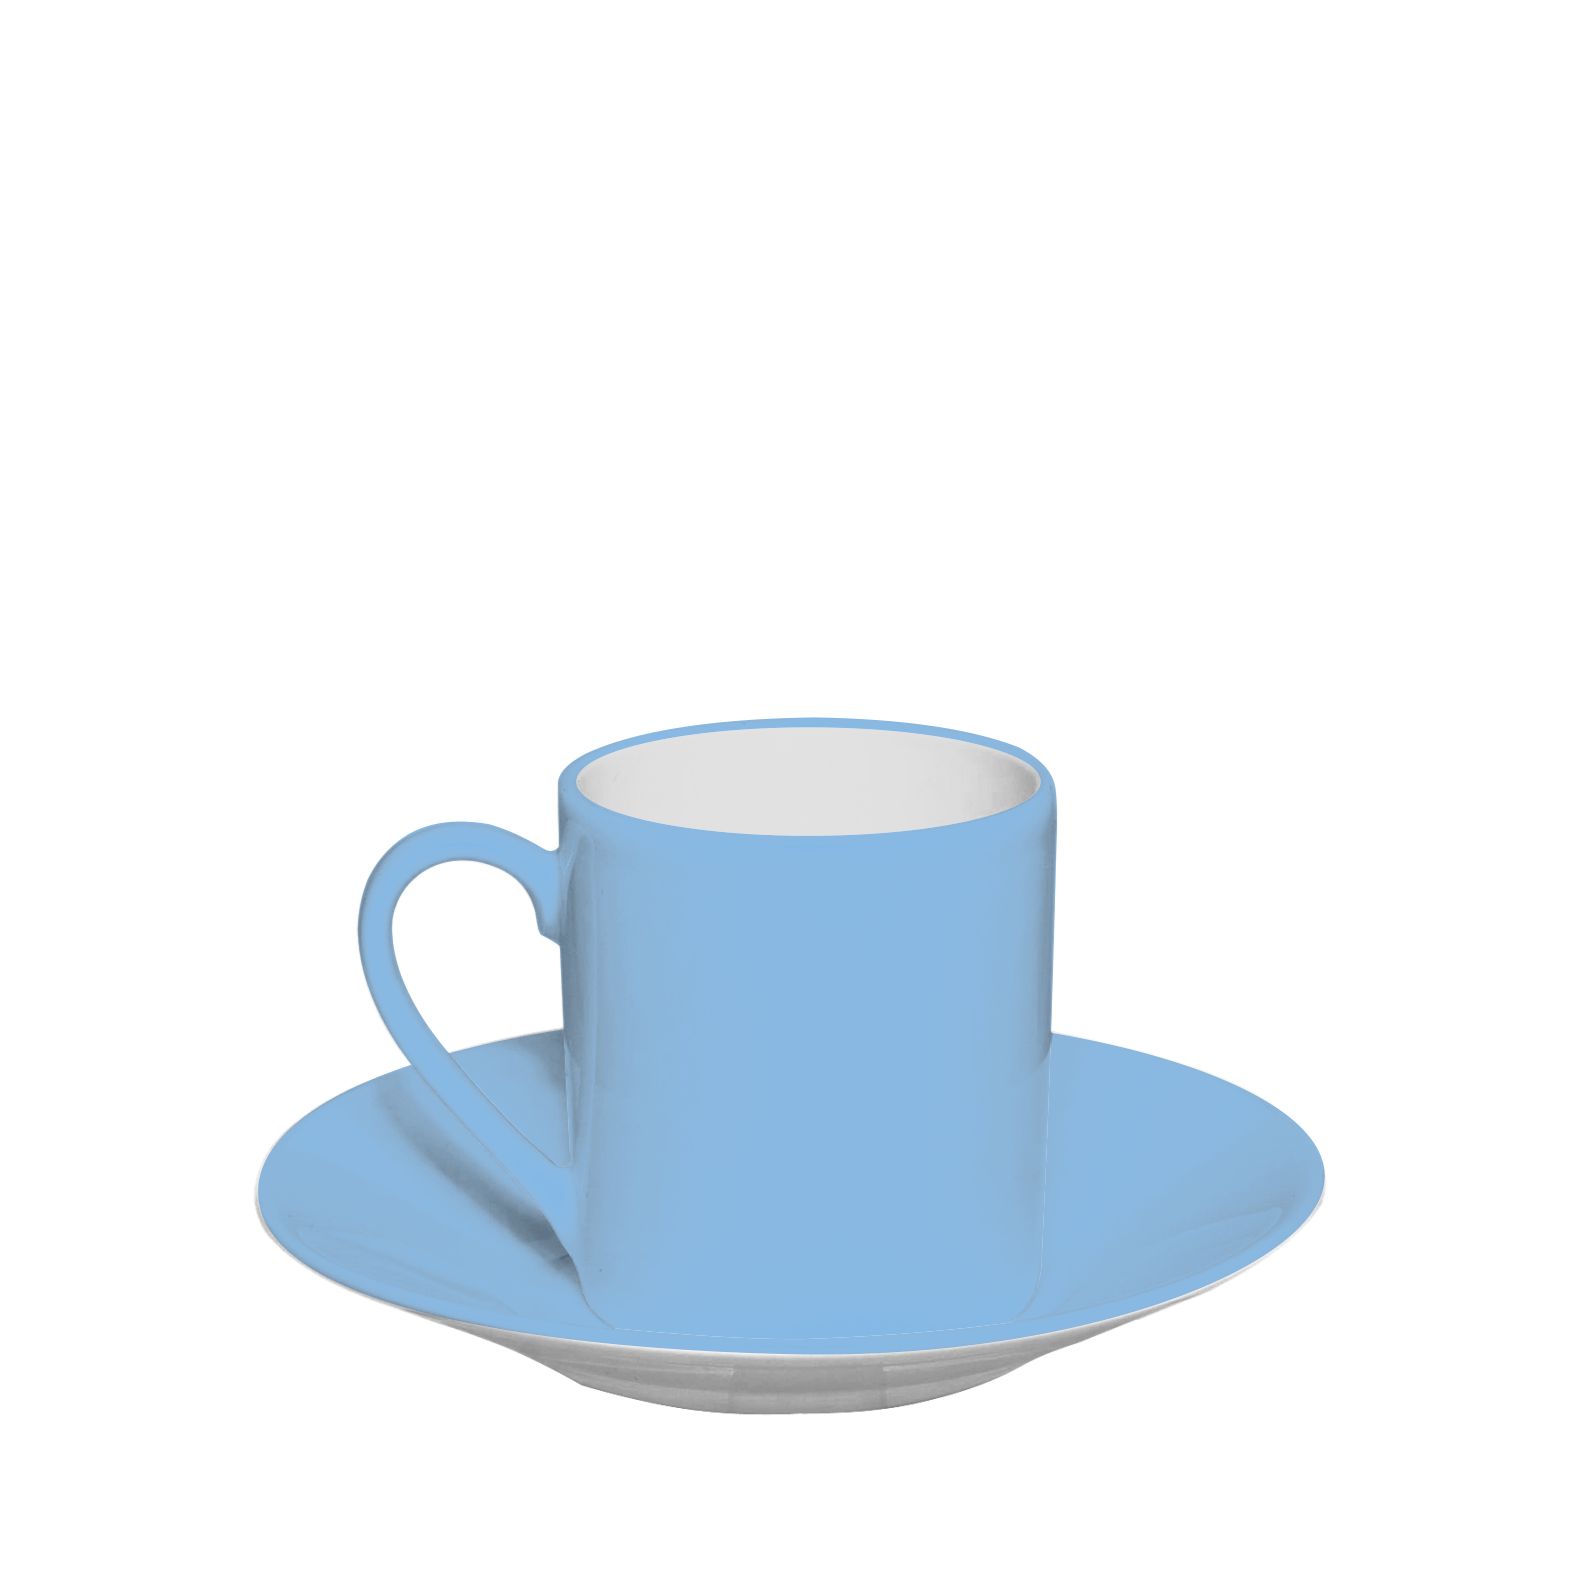 /sites/default/files/2020-03/Fili%C5%BCanka_classic_espresso_blue.jpg